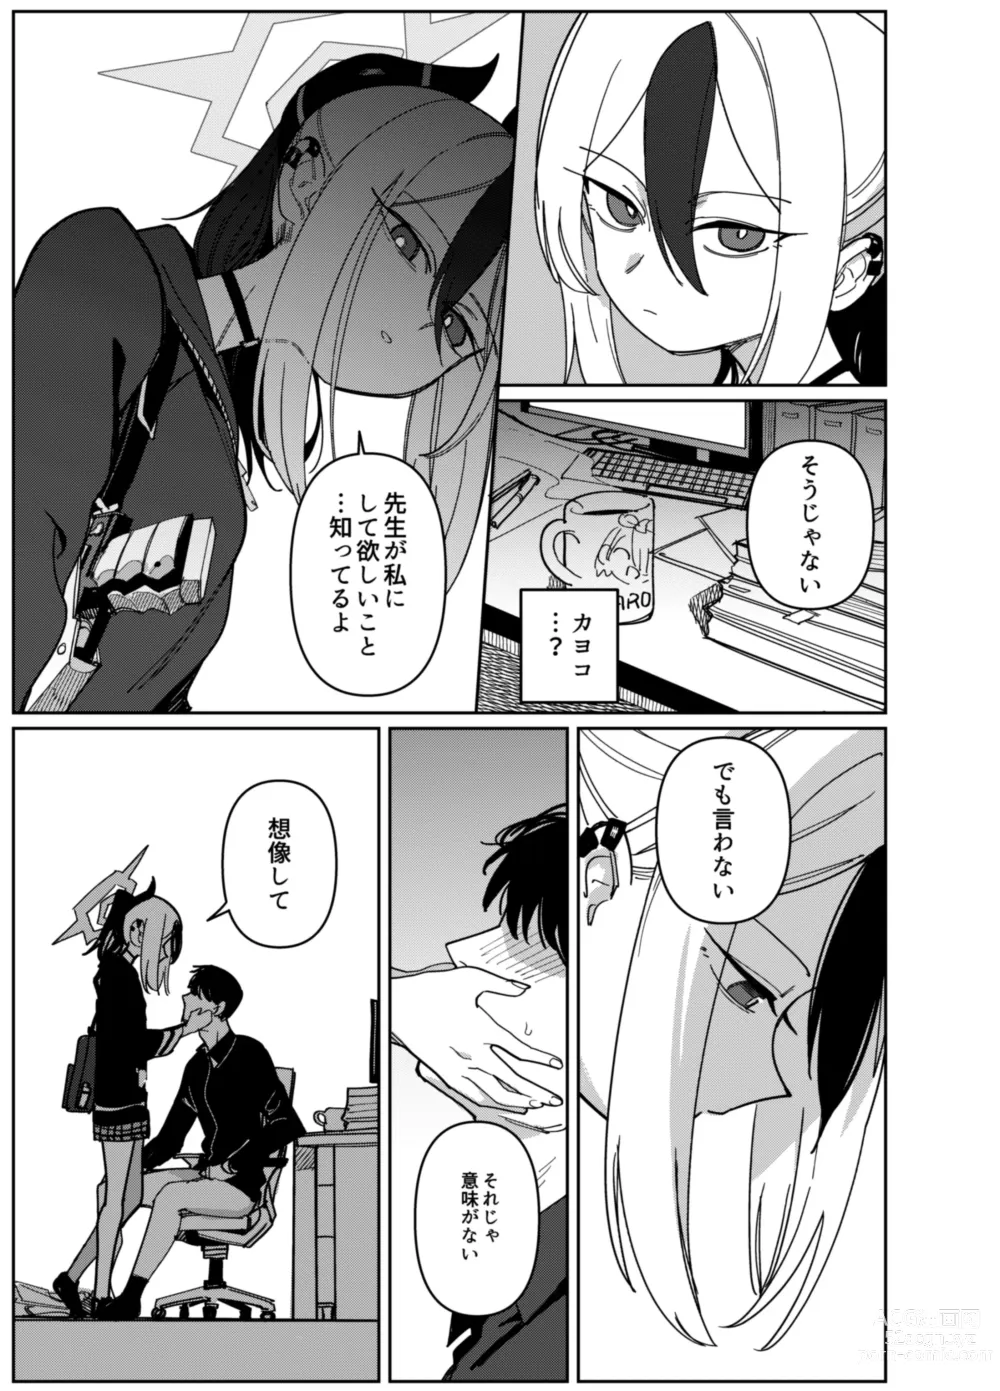 Page 7 of doujinshi Onikata Kayoko wa Konna Koto Shinai. Part. 2 - Onikata Kayoko wont do this type of stuff.